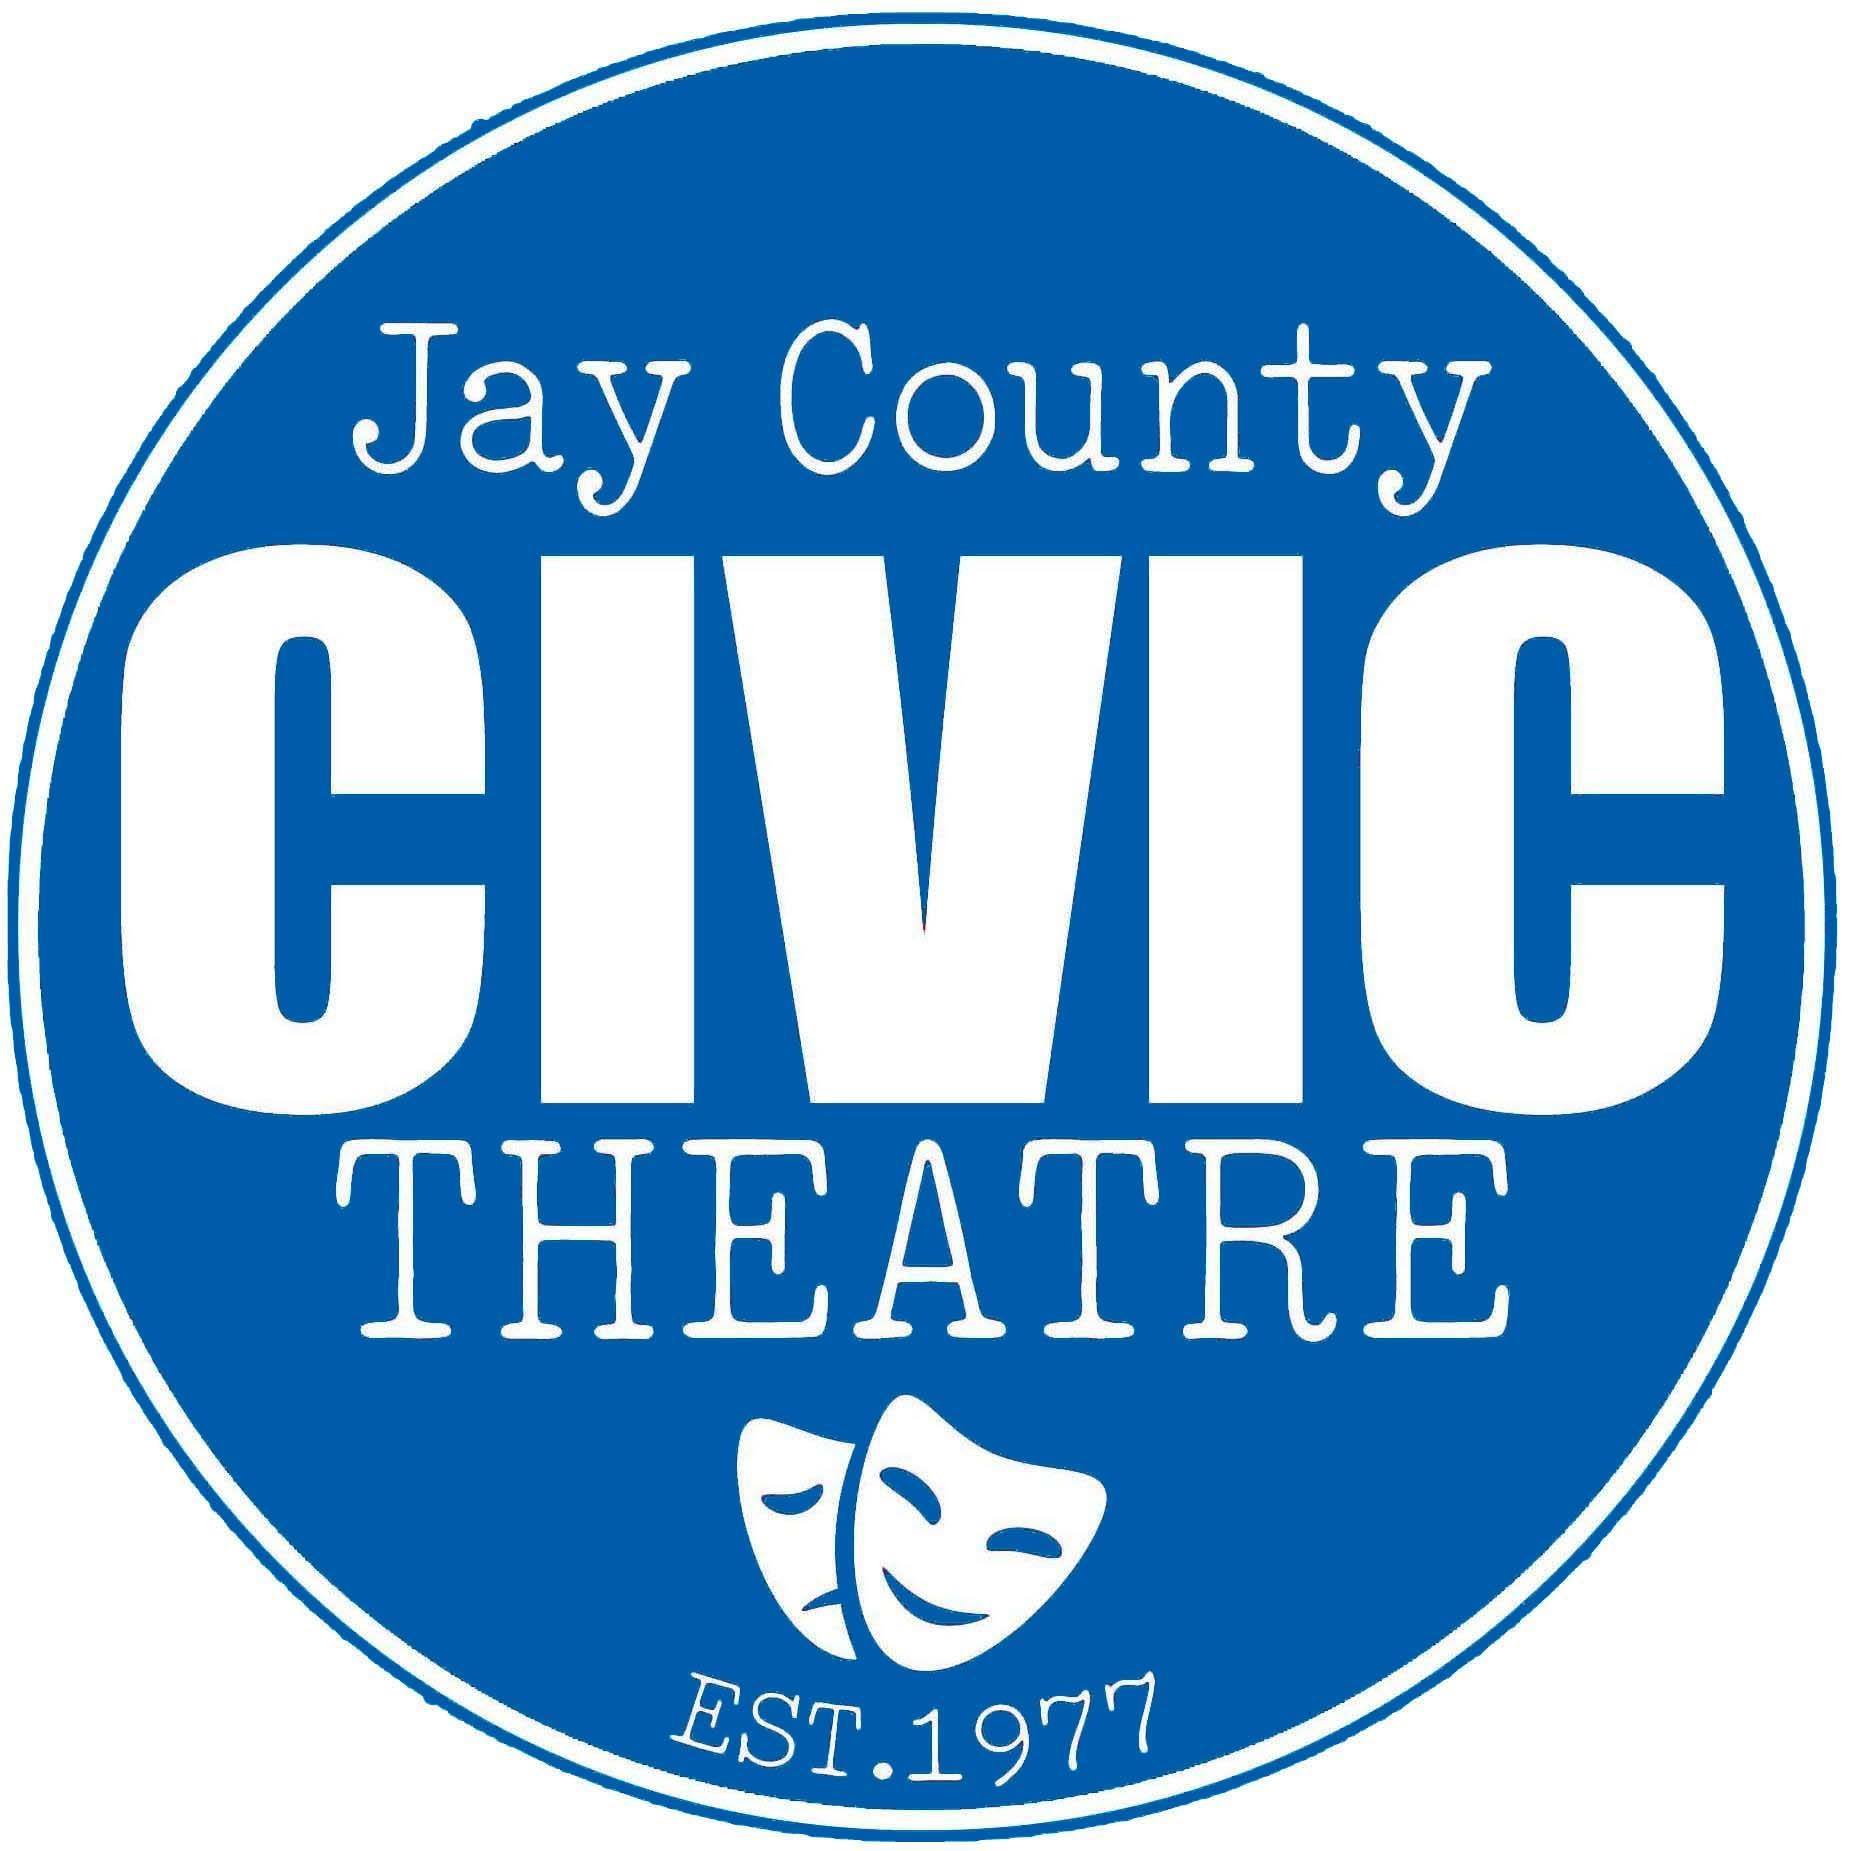 Jay County Civic Theatre